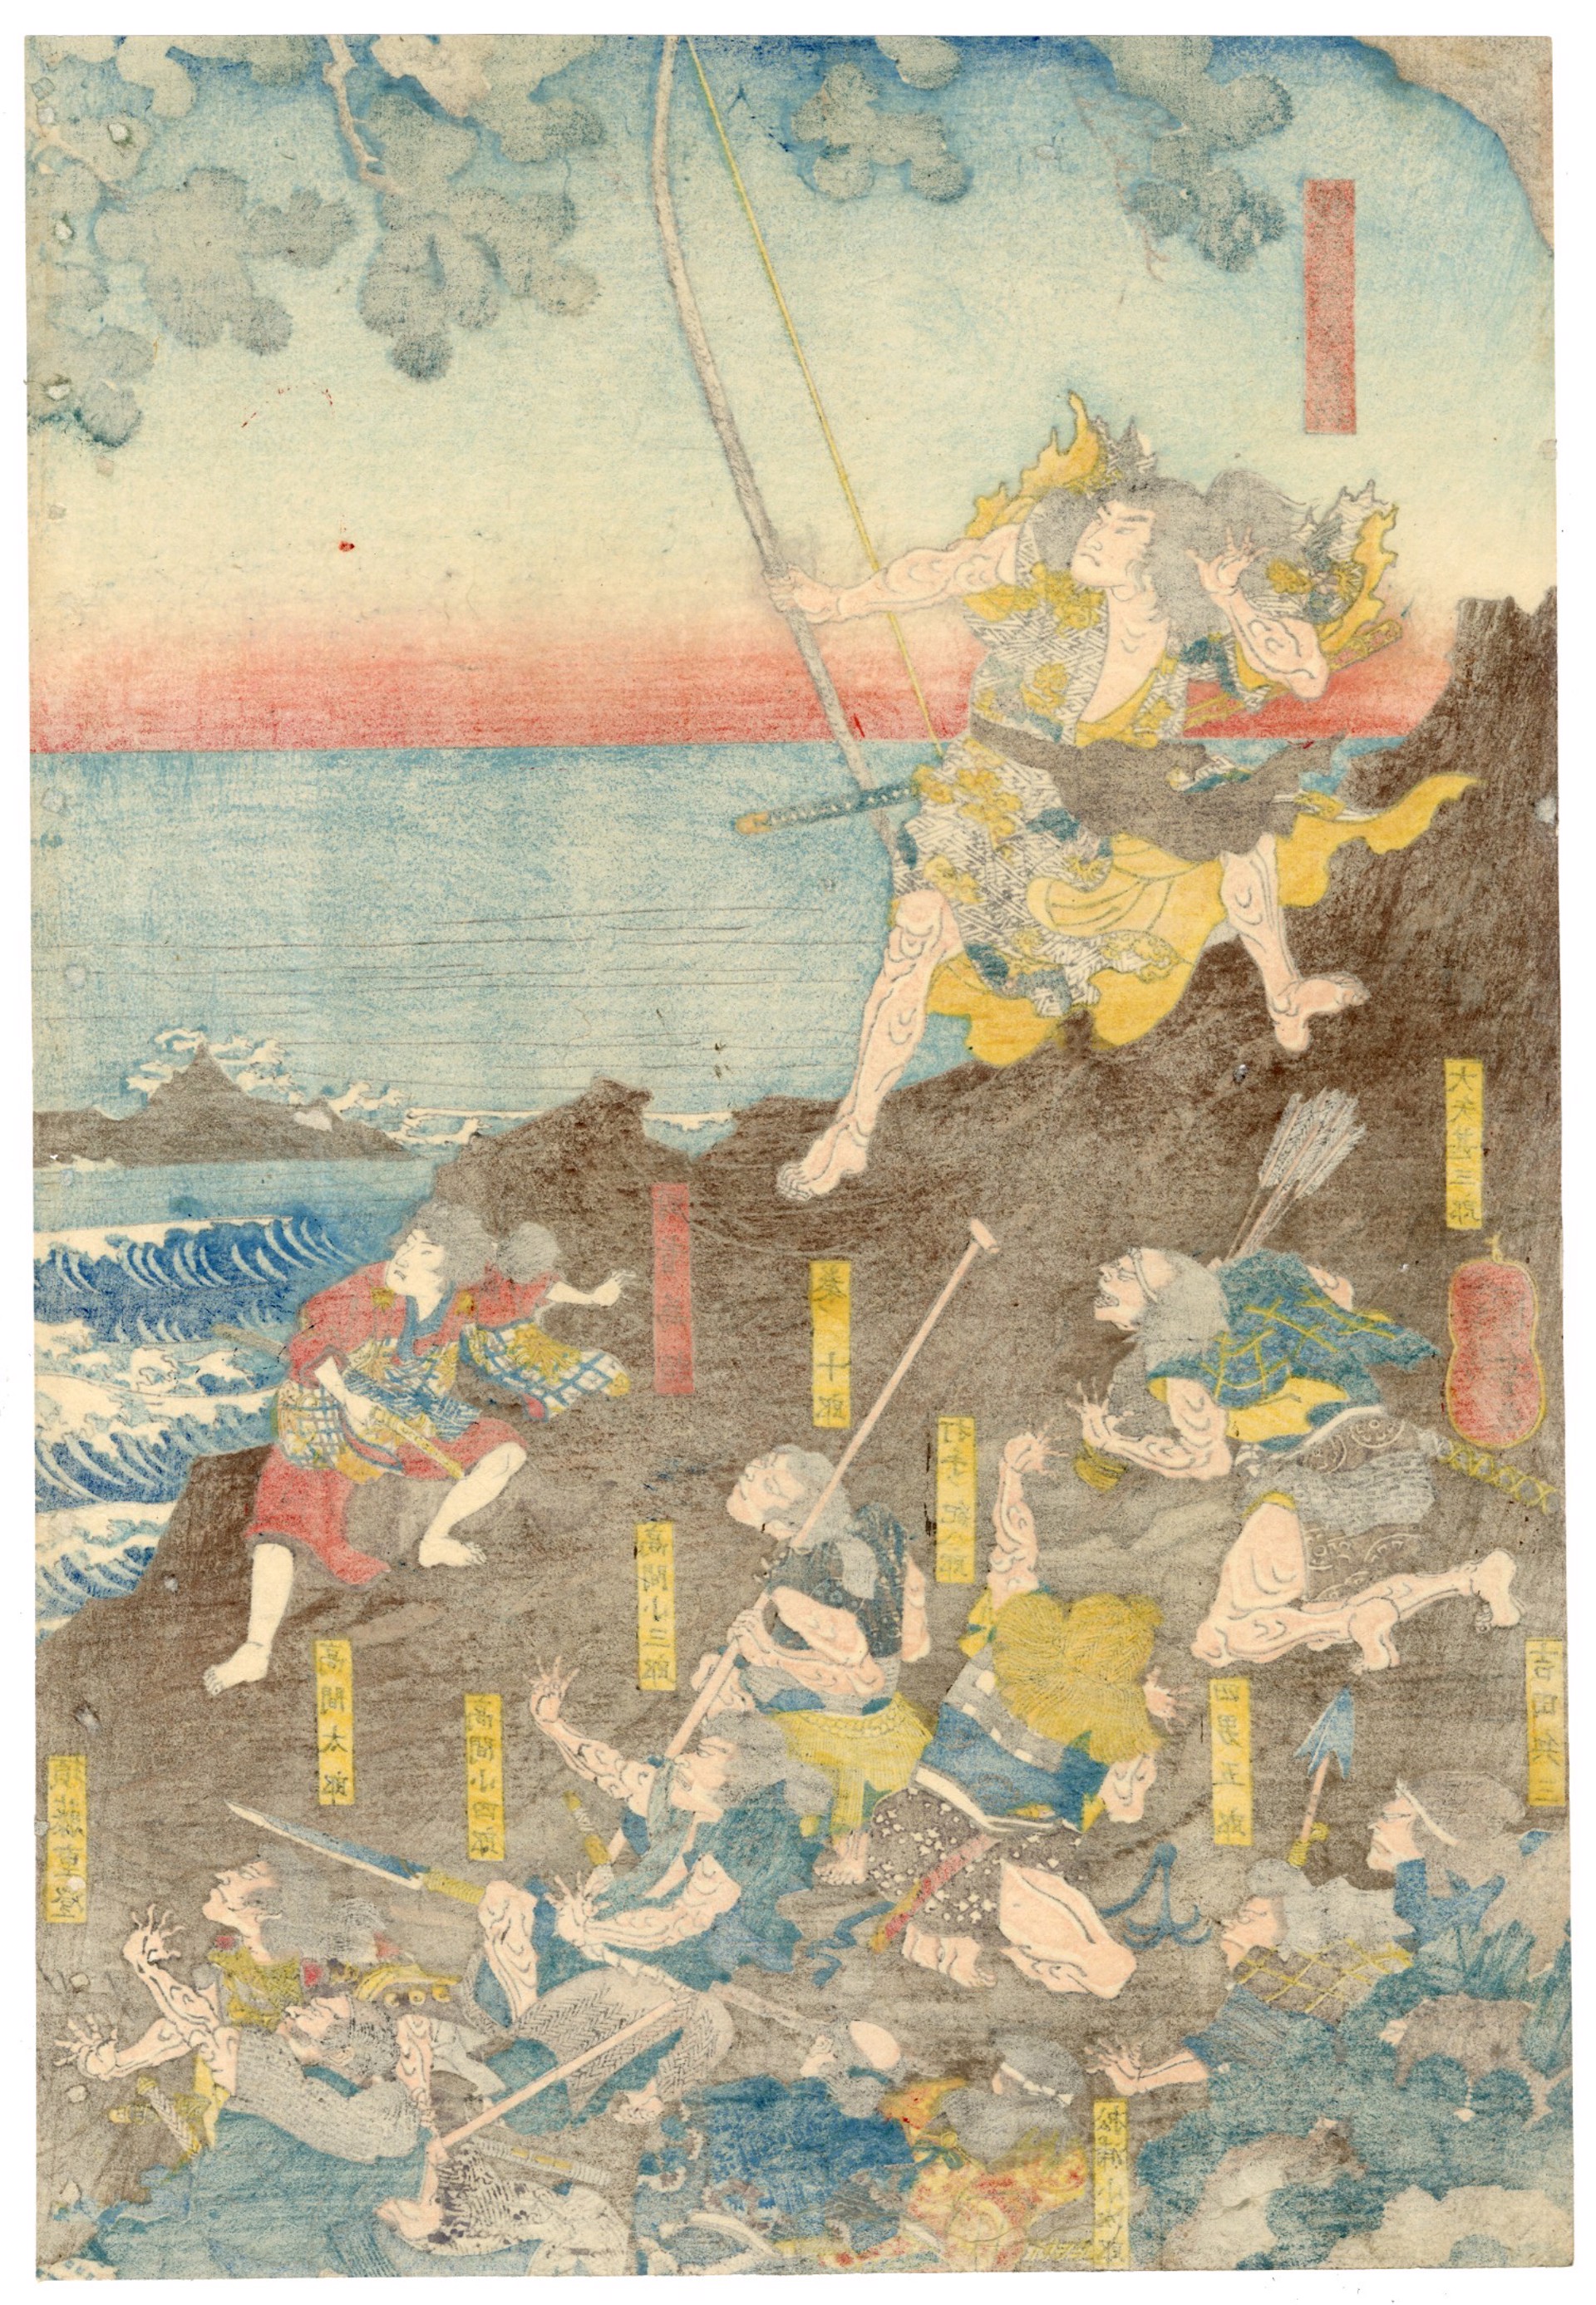 Chinzei Hachiro Tametomo Sinking the Foremost Ship of Mochimitsu's Fleet with a Single Arrow by Kuniyoshi